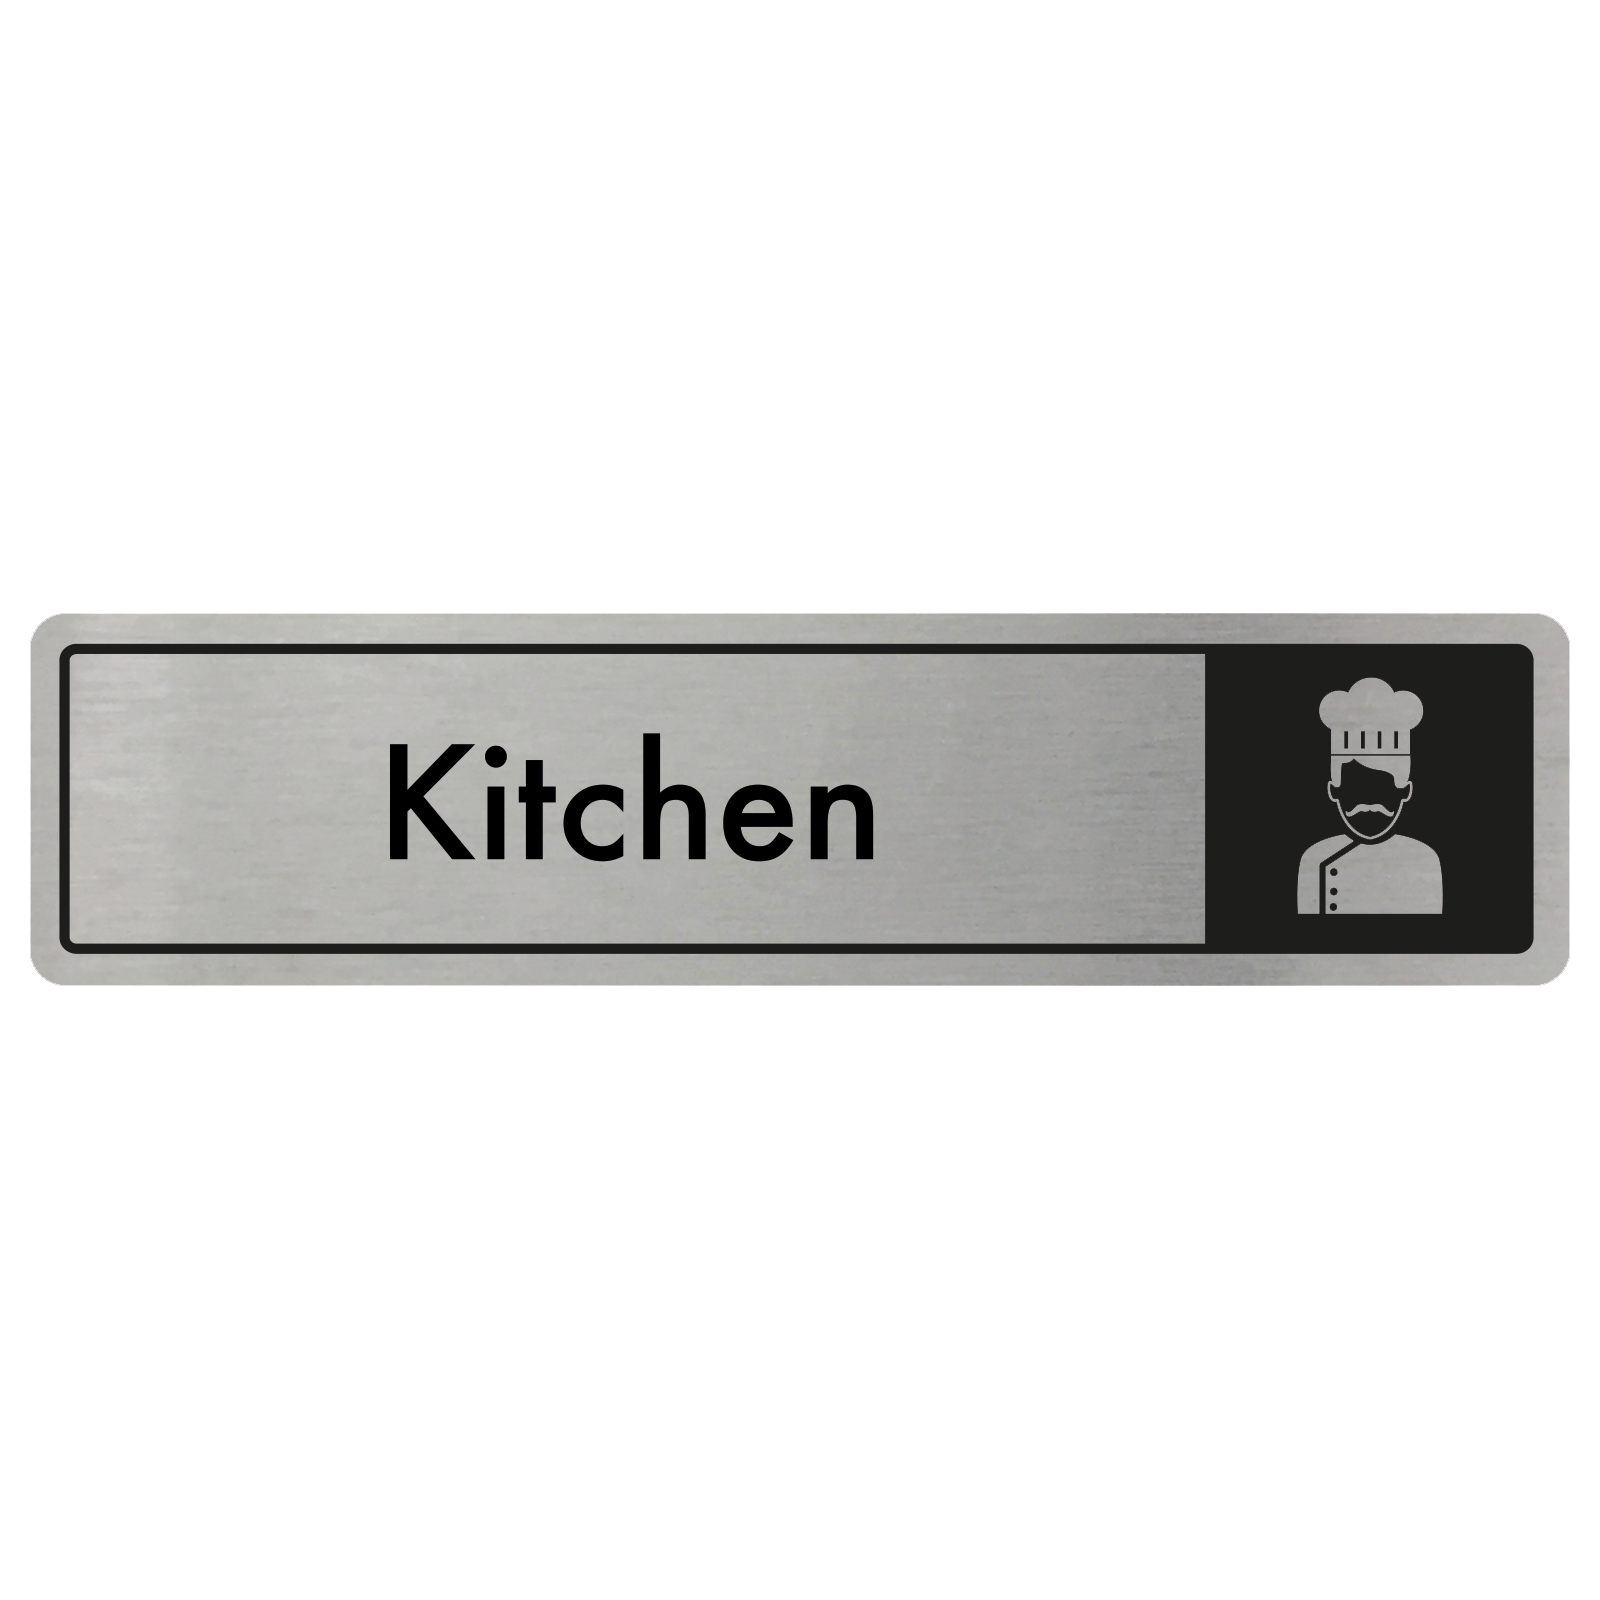 Kitchen Door Sign - Black on Silver